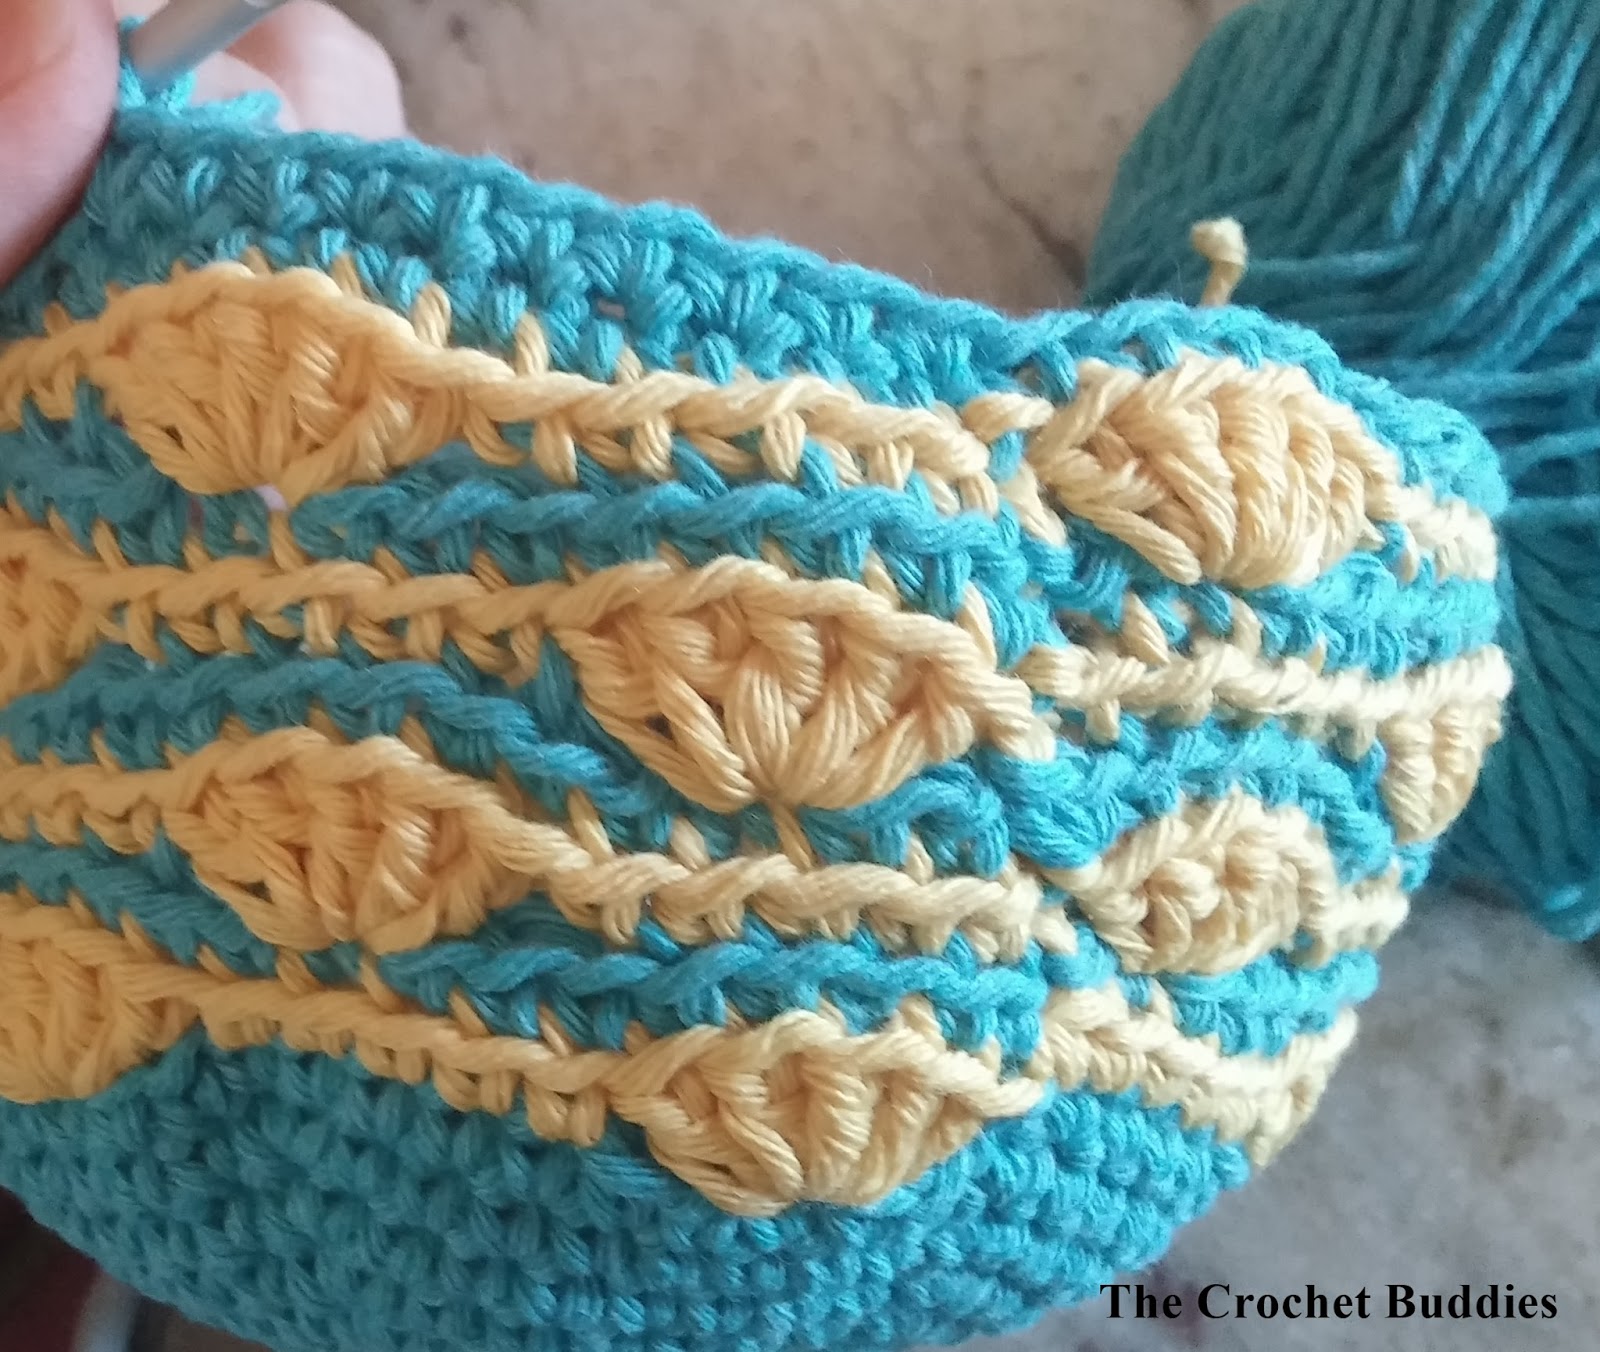 The Crochet Buddies